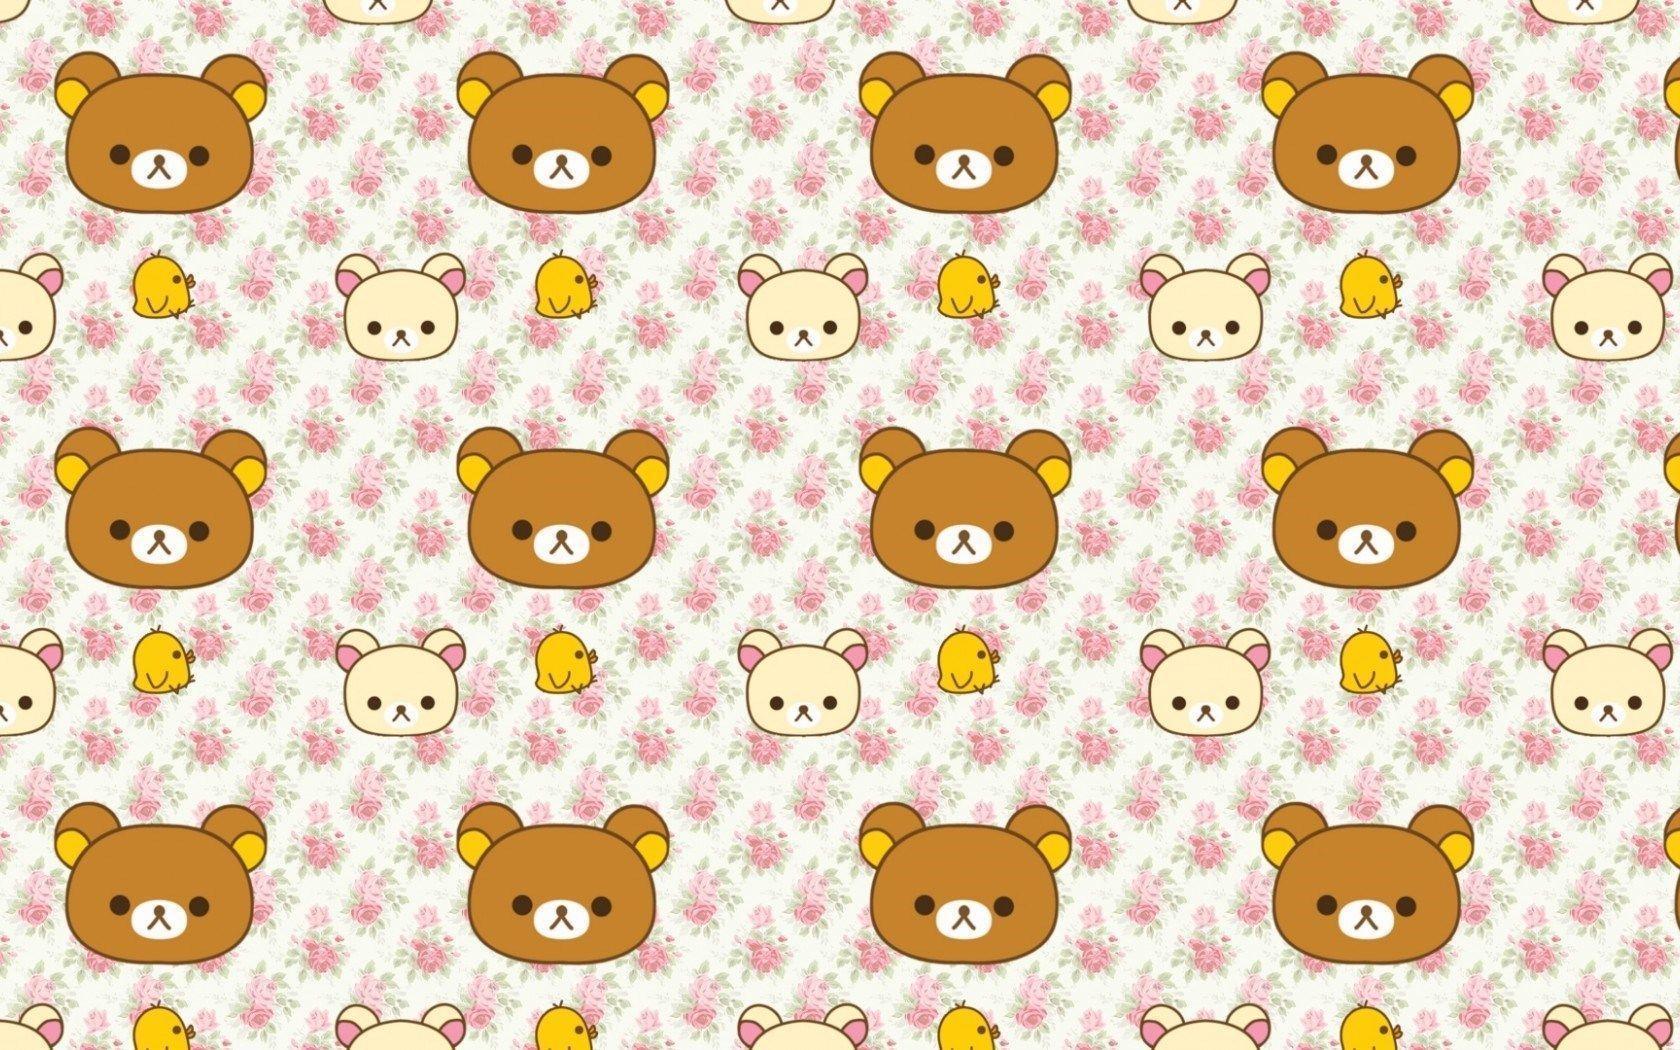  Teddy  Bears  Wallpapers  Wallpaper  Cave